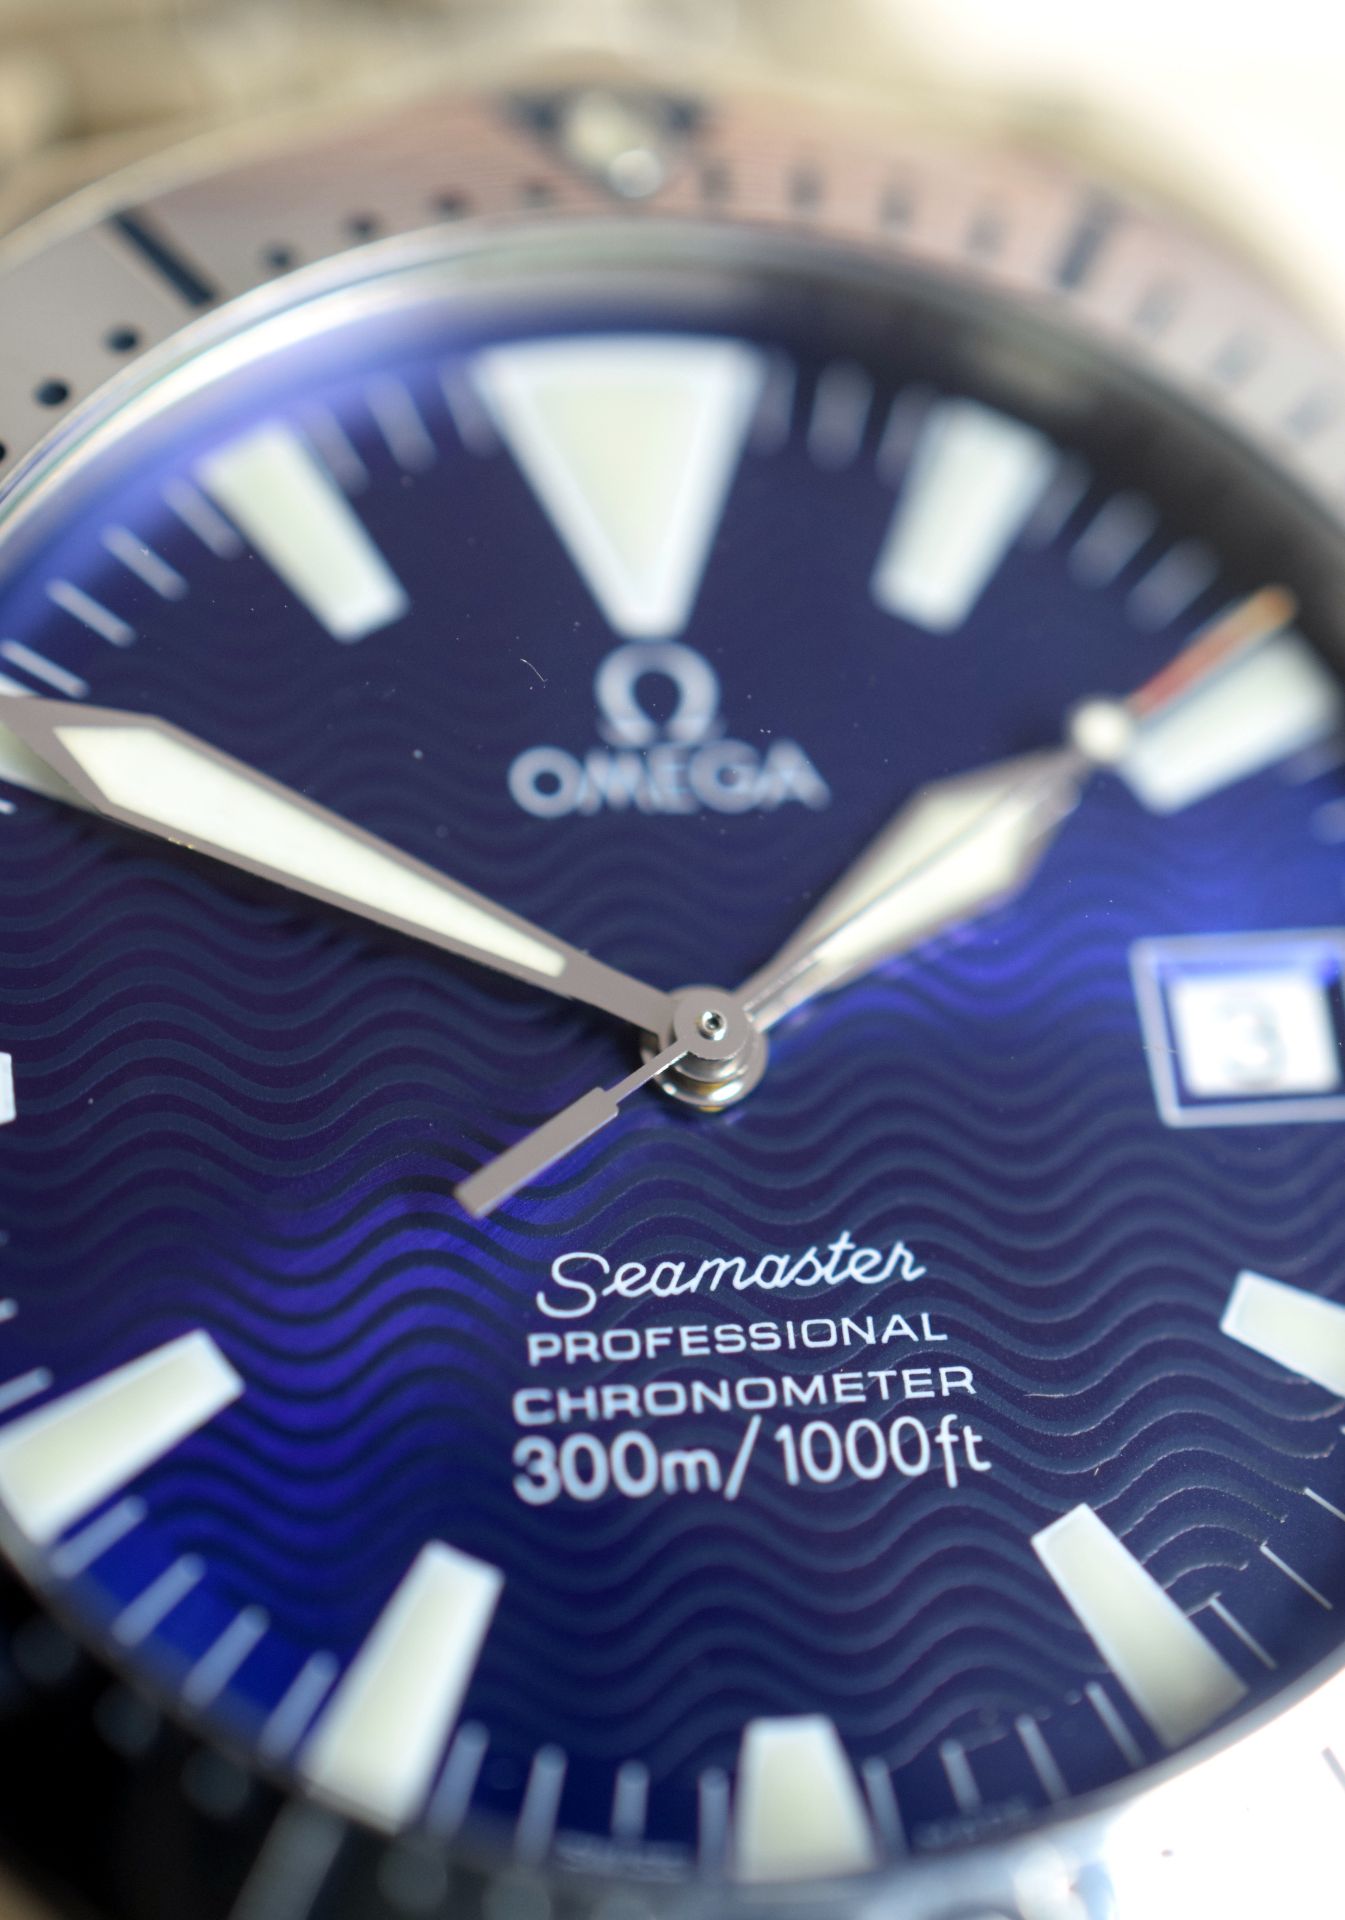 Omega Seamaster Professional Chronometer 300mts/1000ft In Titanium On Titanium Bracelet - Image 4 of 10